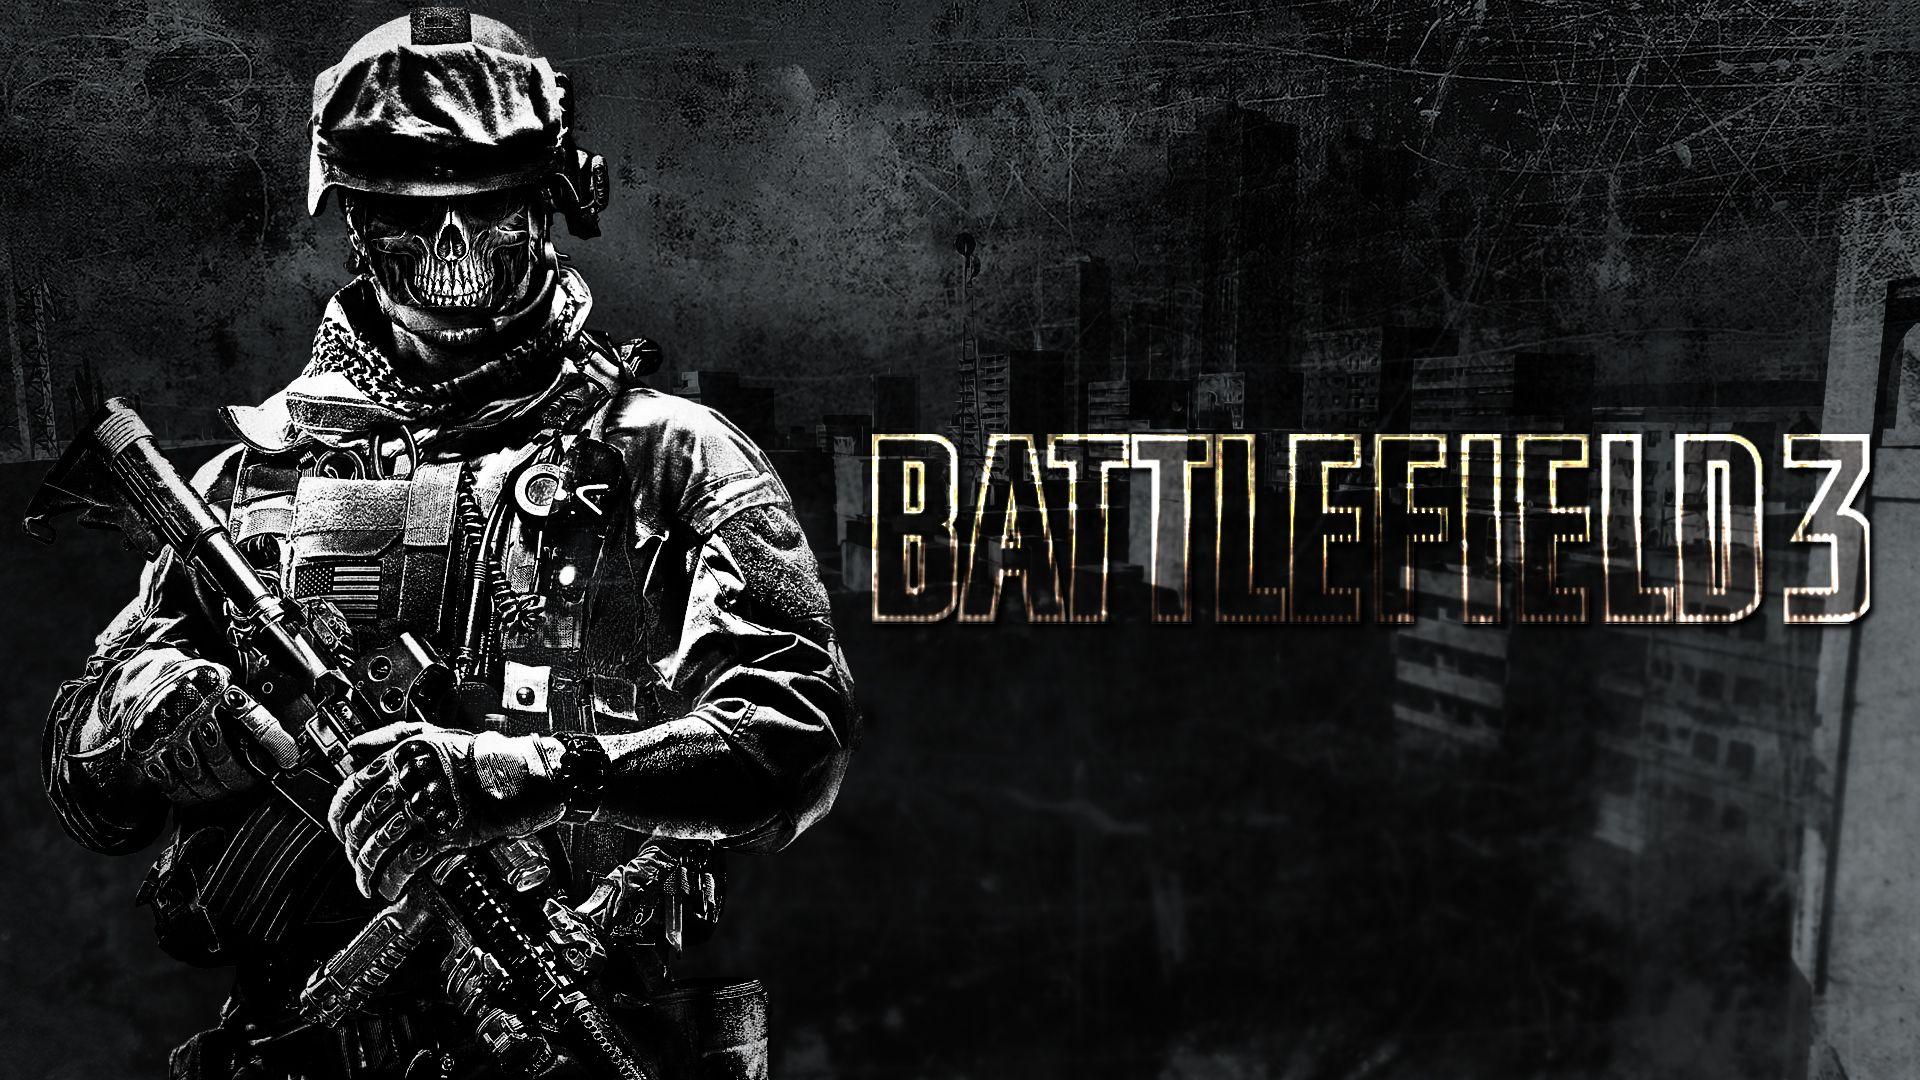 Battlefield 3 Wallpaper 2